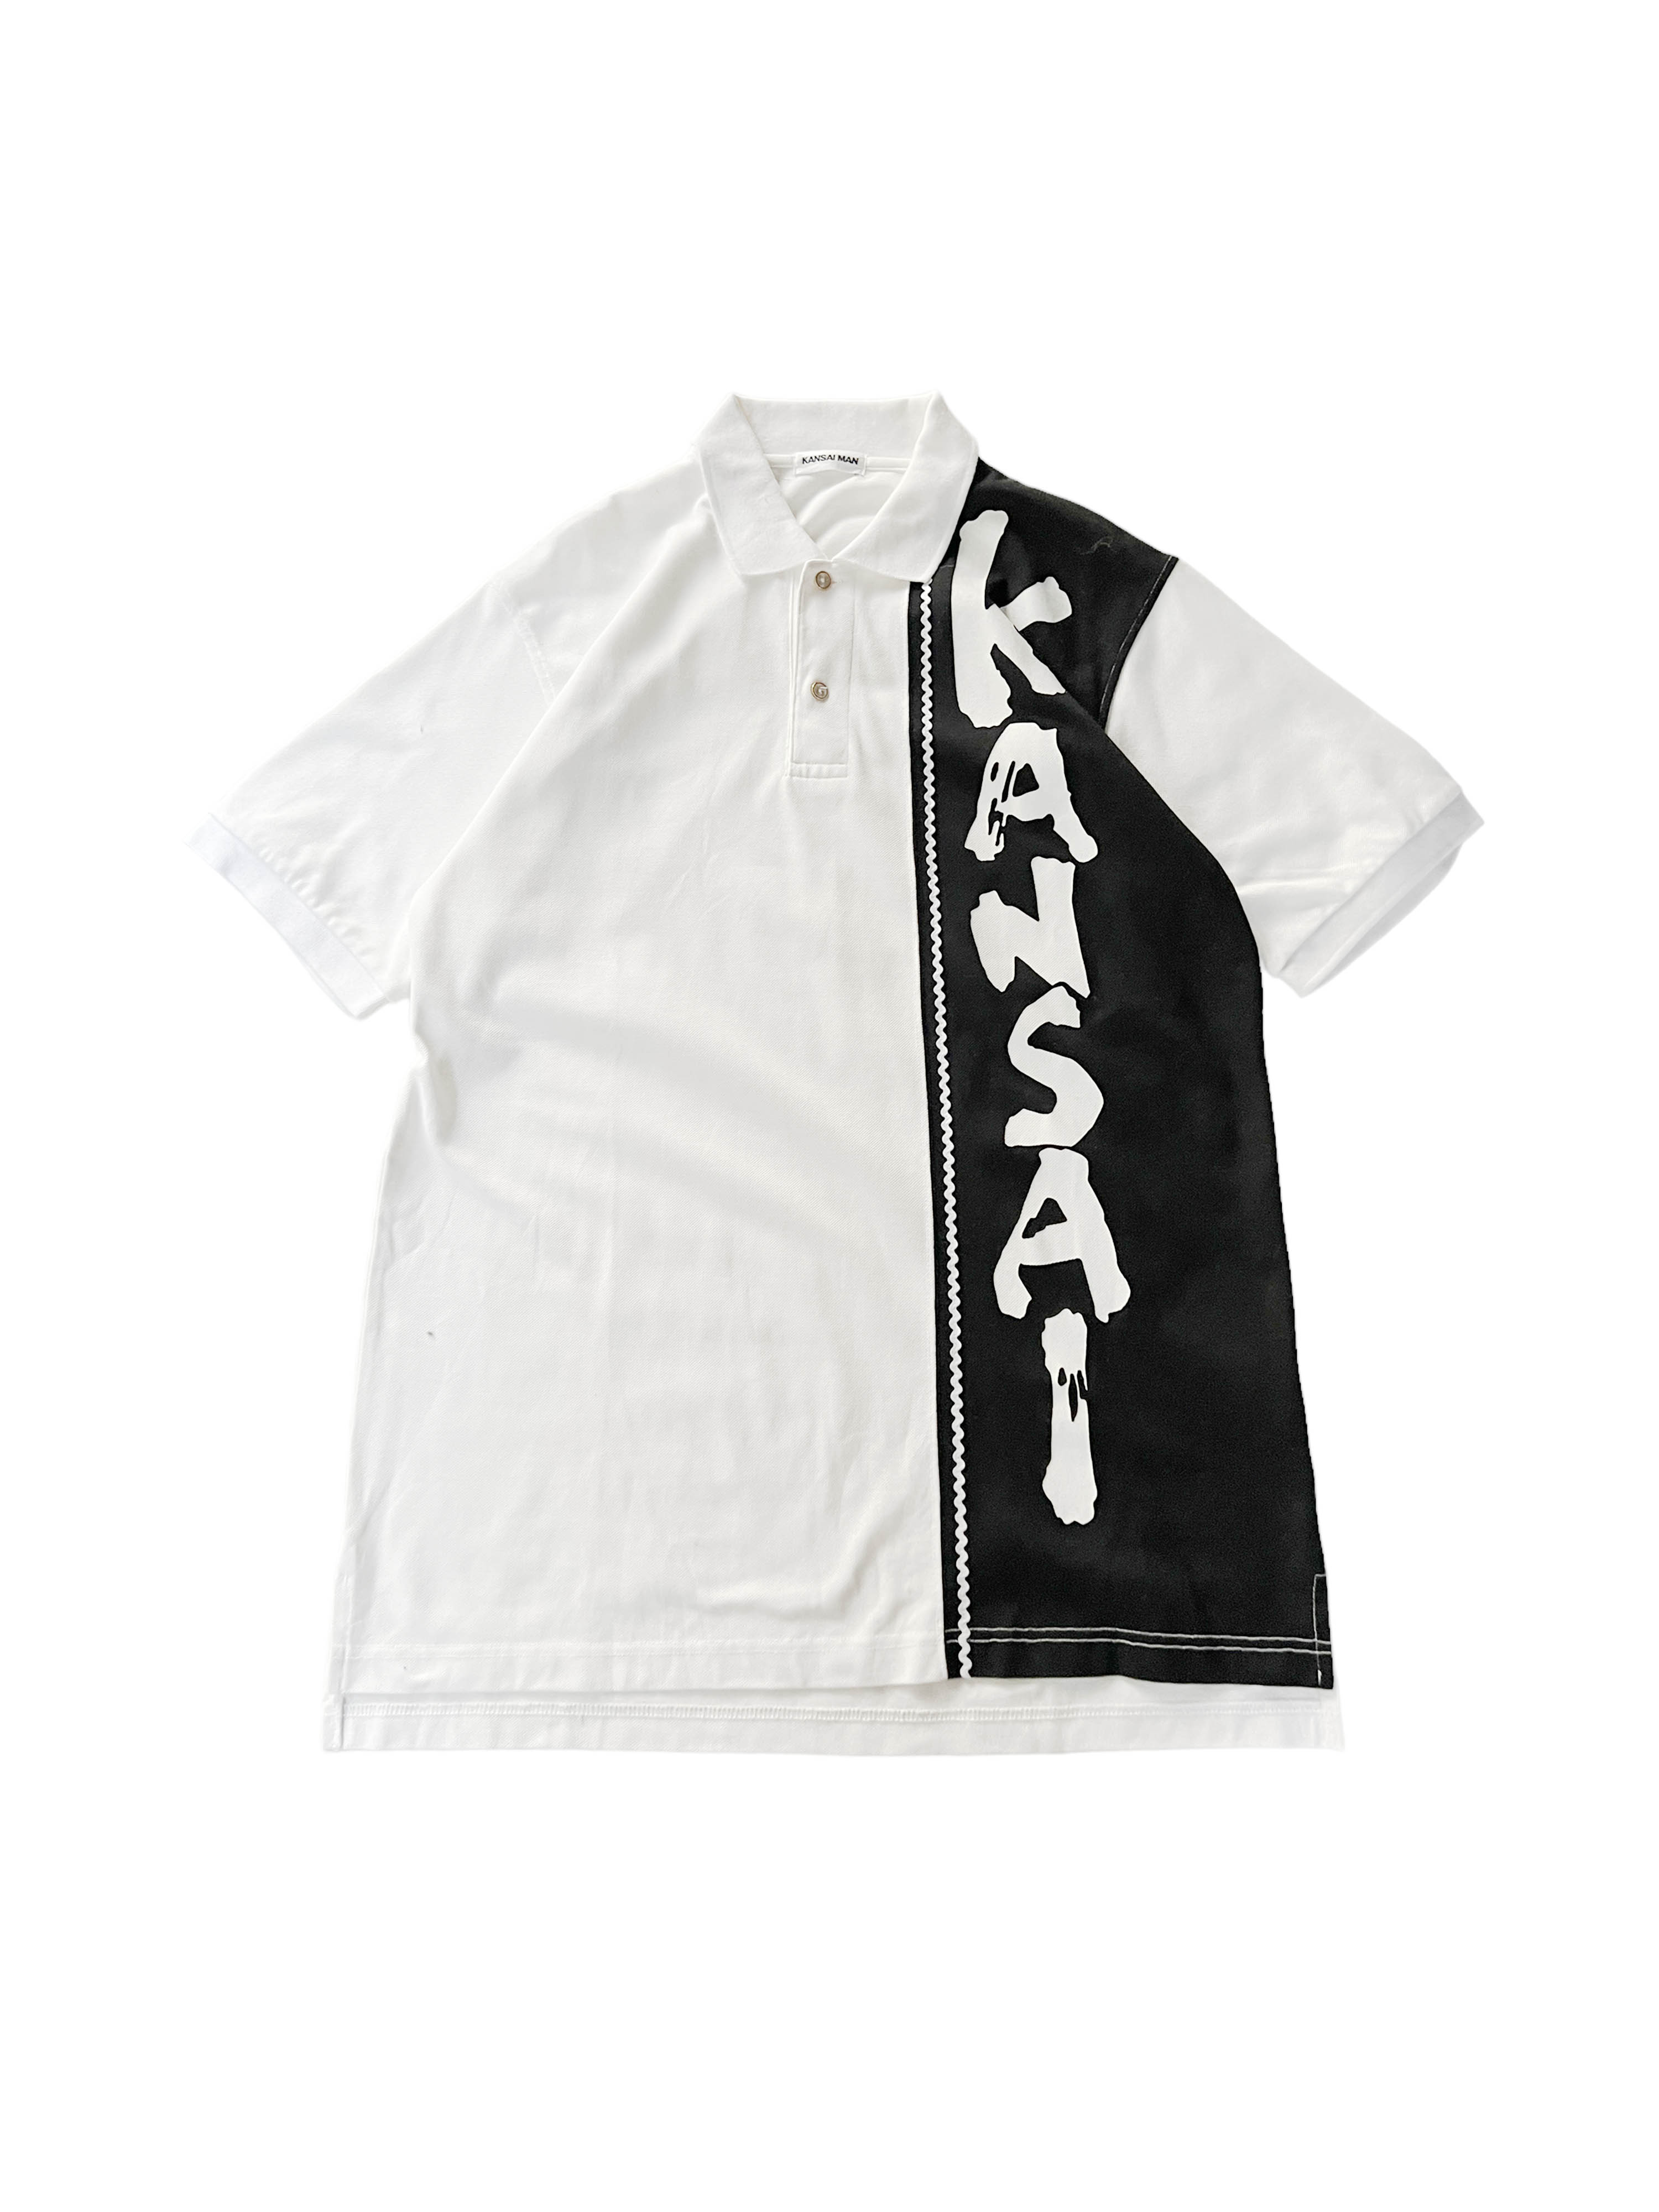 KANSAI MAN logo pk t-shirts